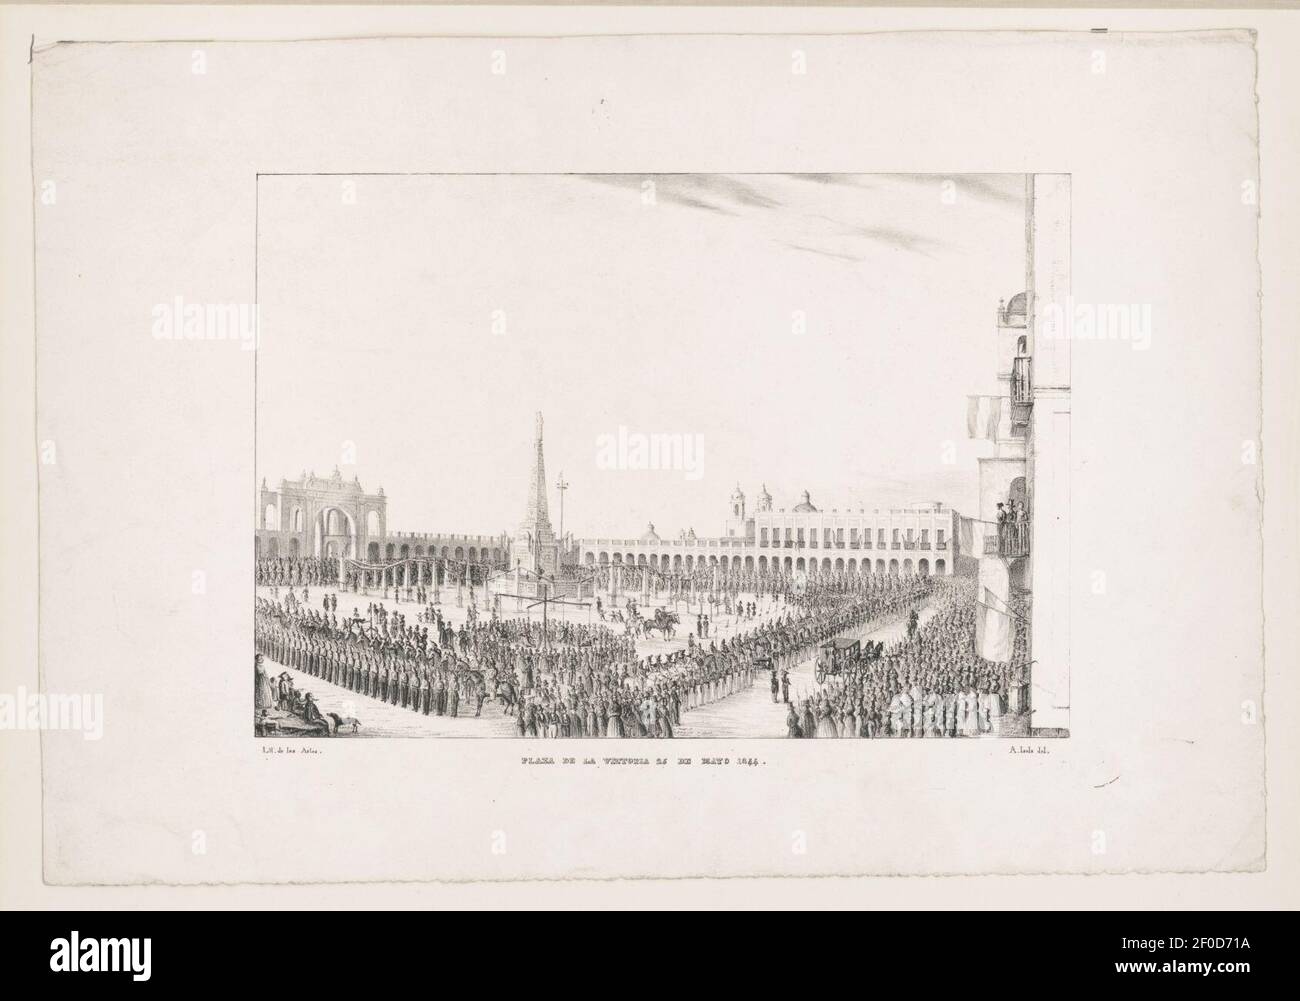 La Plaza de la Victoria, 25 de mayo de 1844 Foto de stock